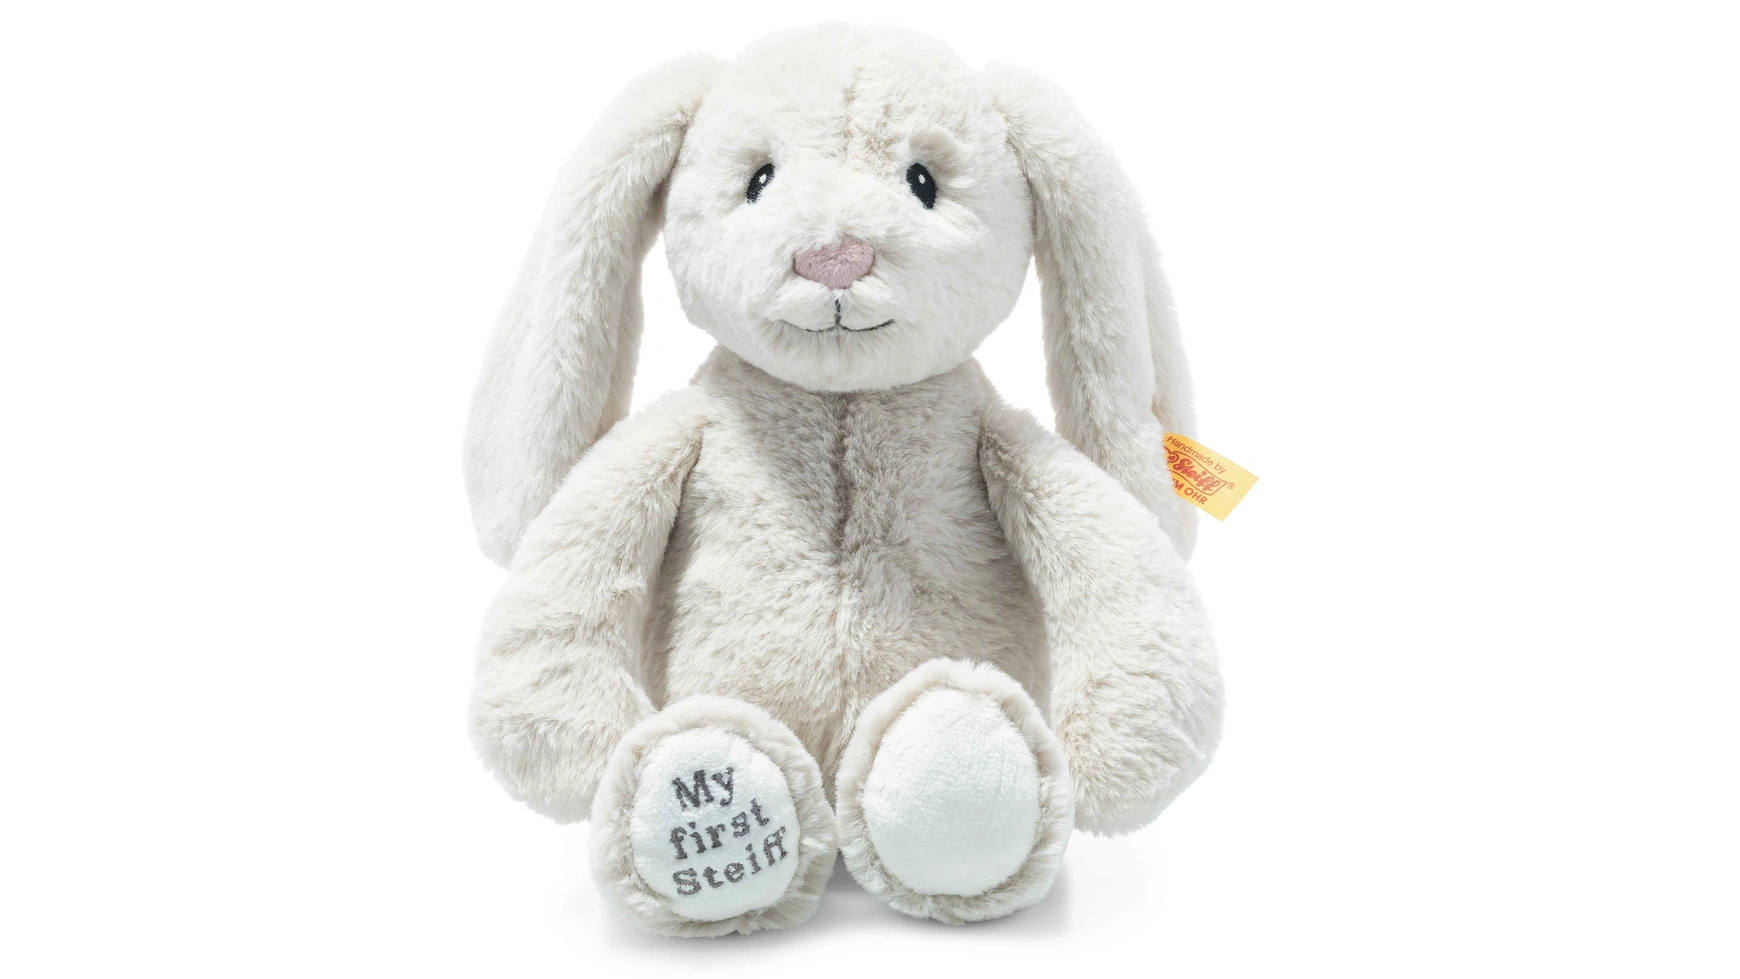 Steiff Soft Cuddly Friends Мой первый кролик Steiff Hoppie цена и фото